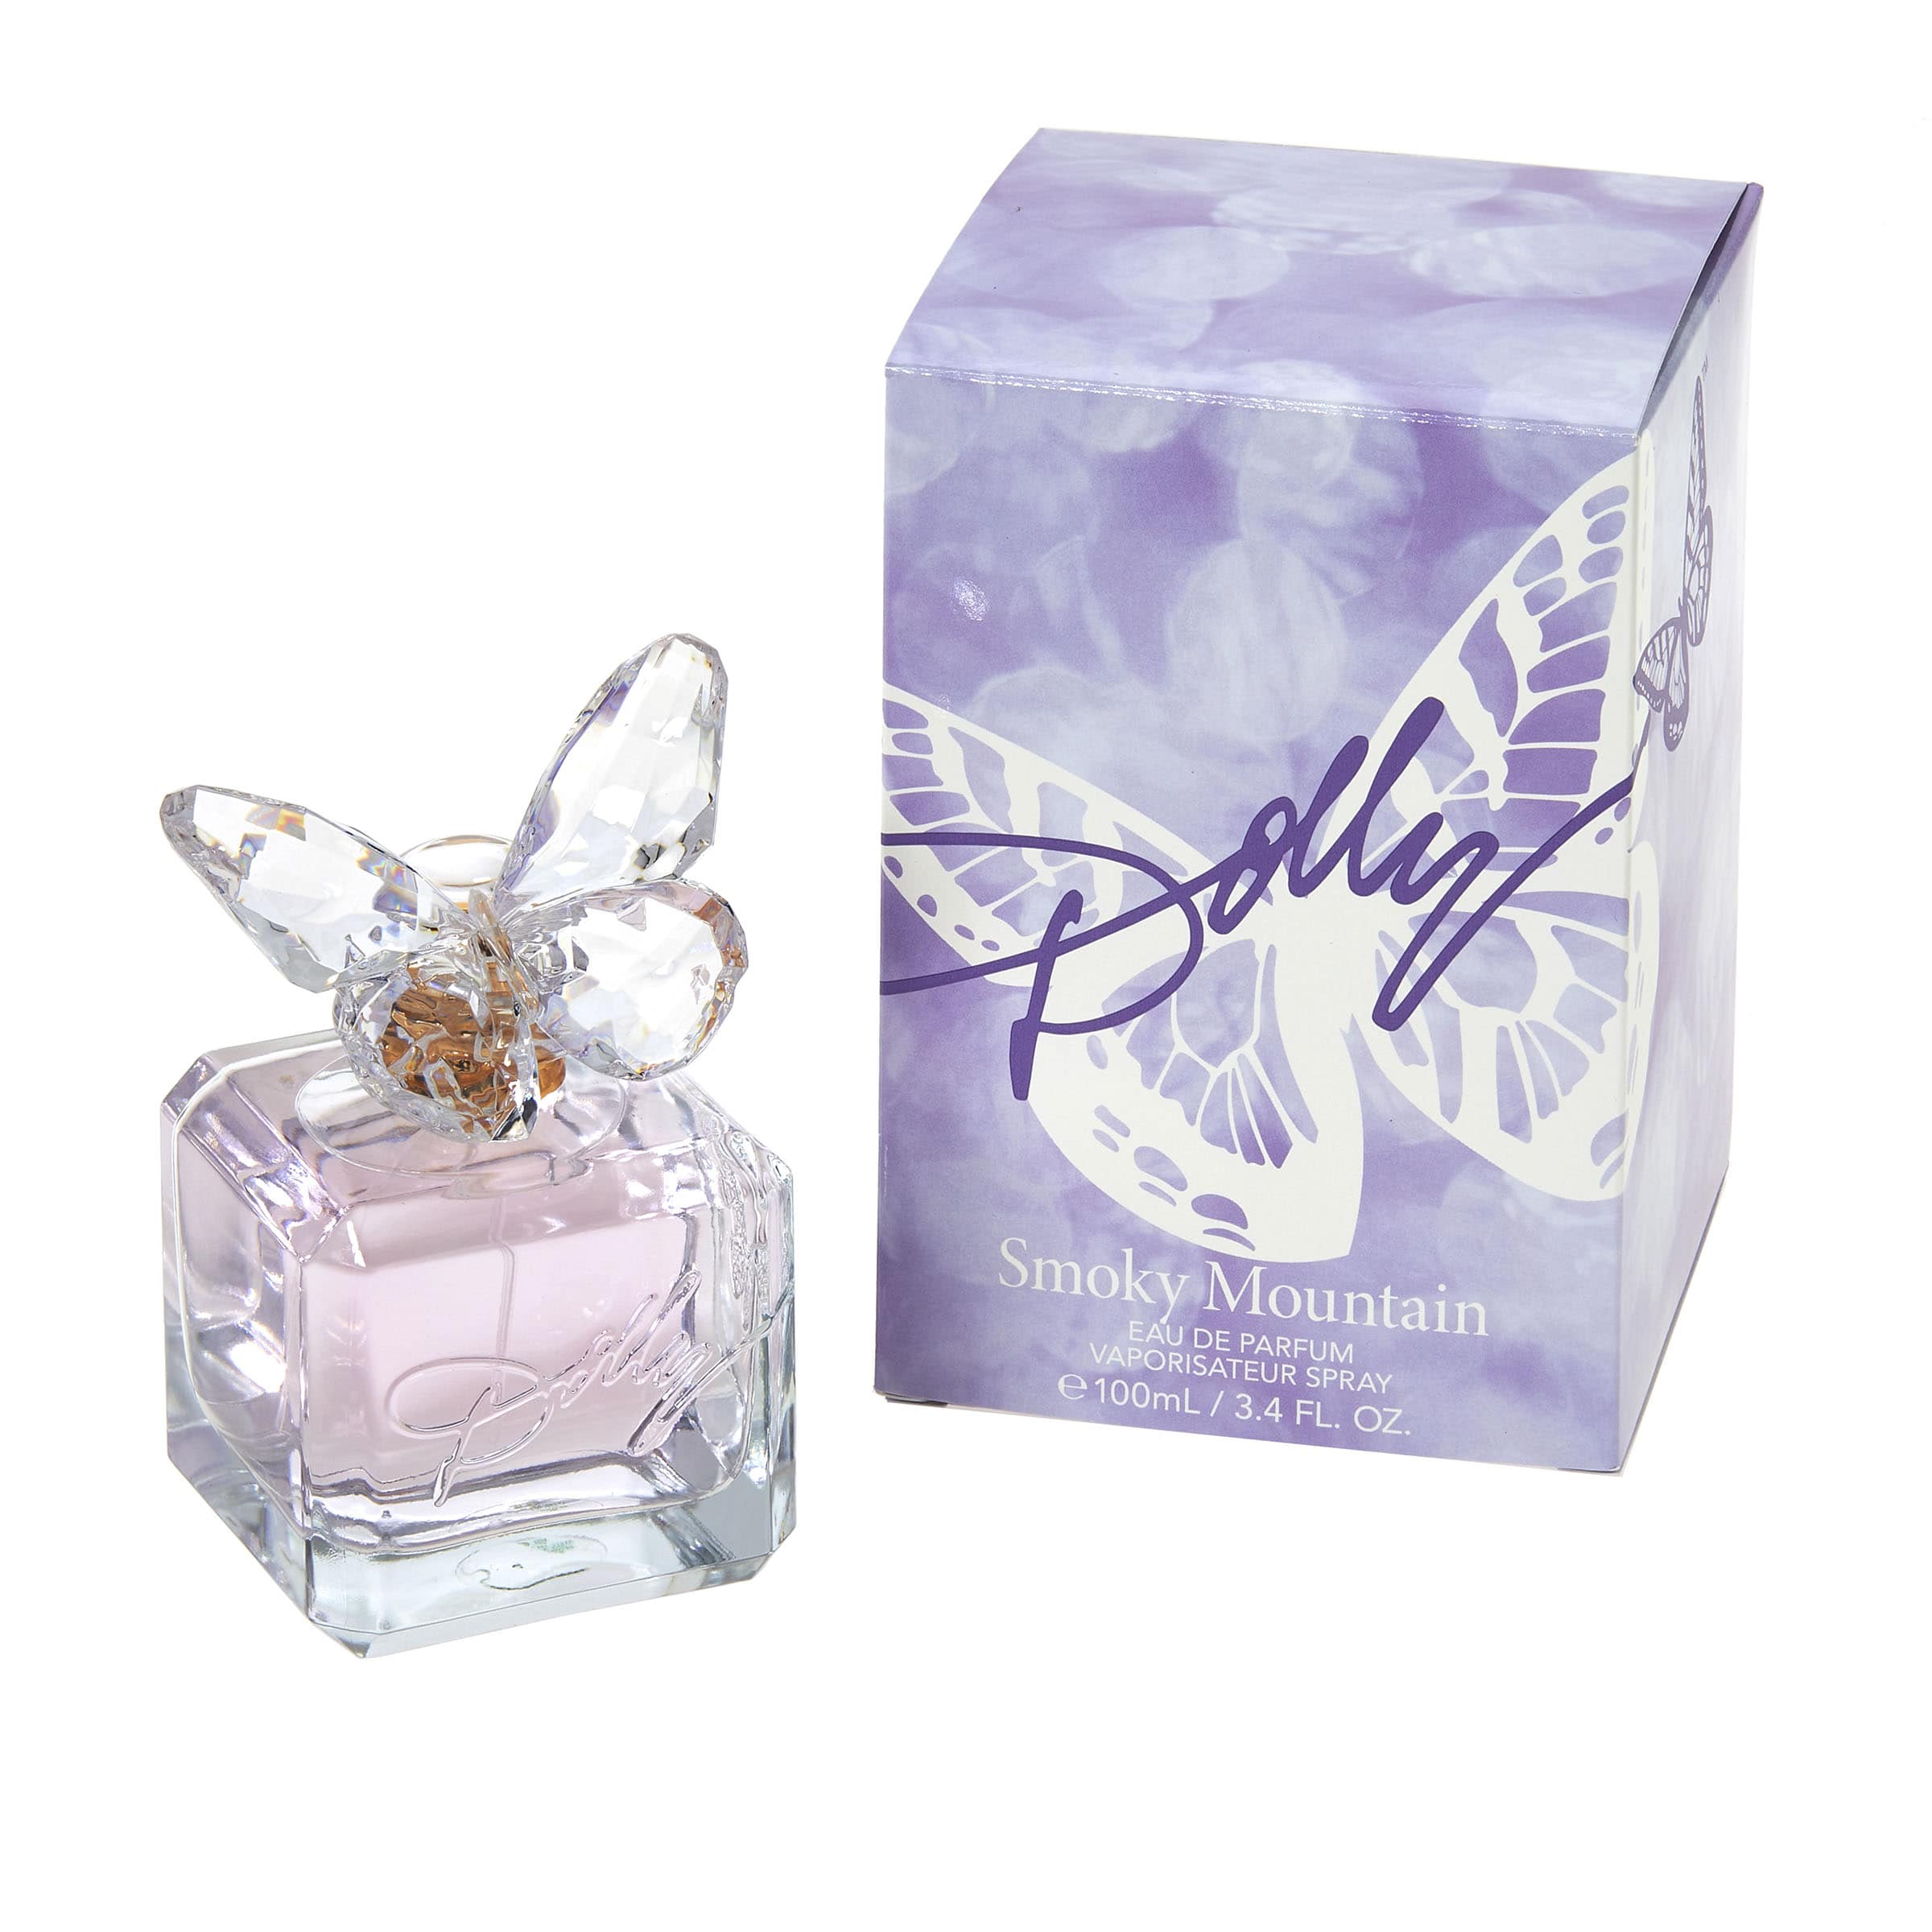 Dolly Parton Expands Her Fragrance Portfolio